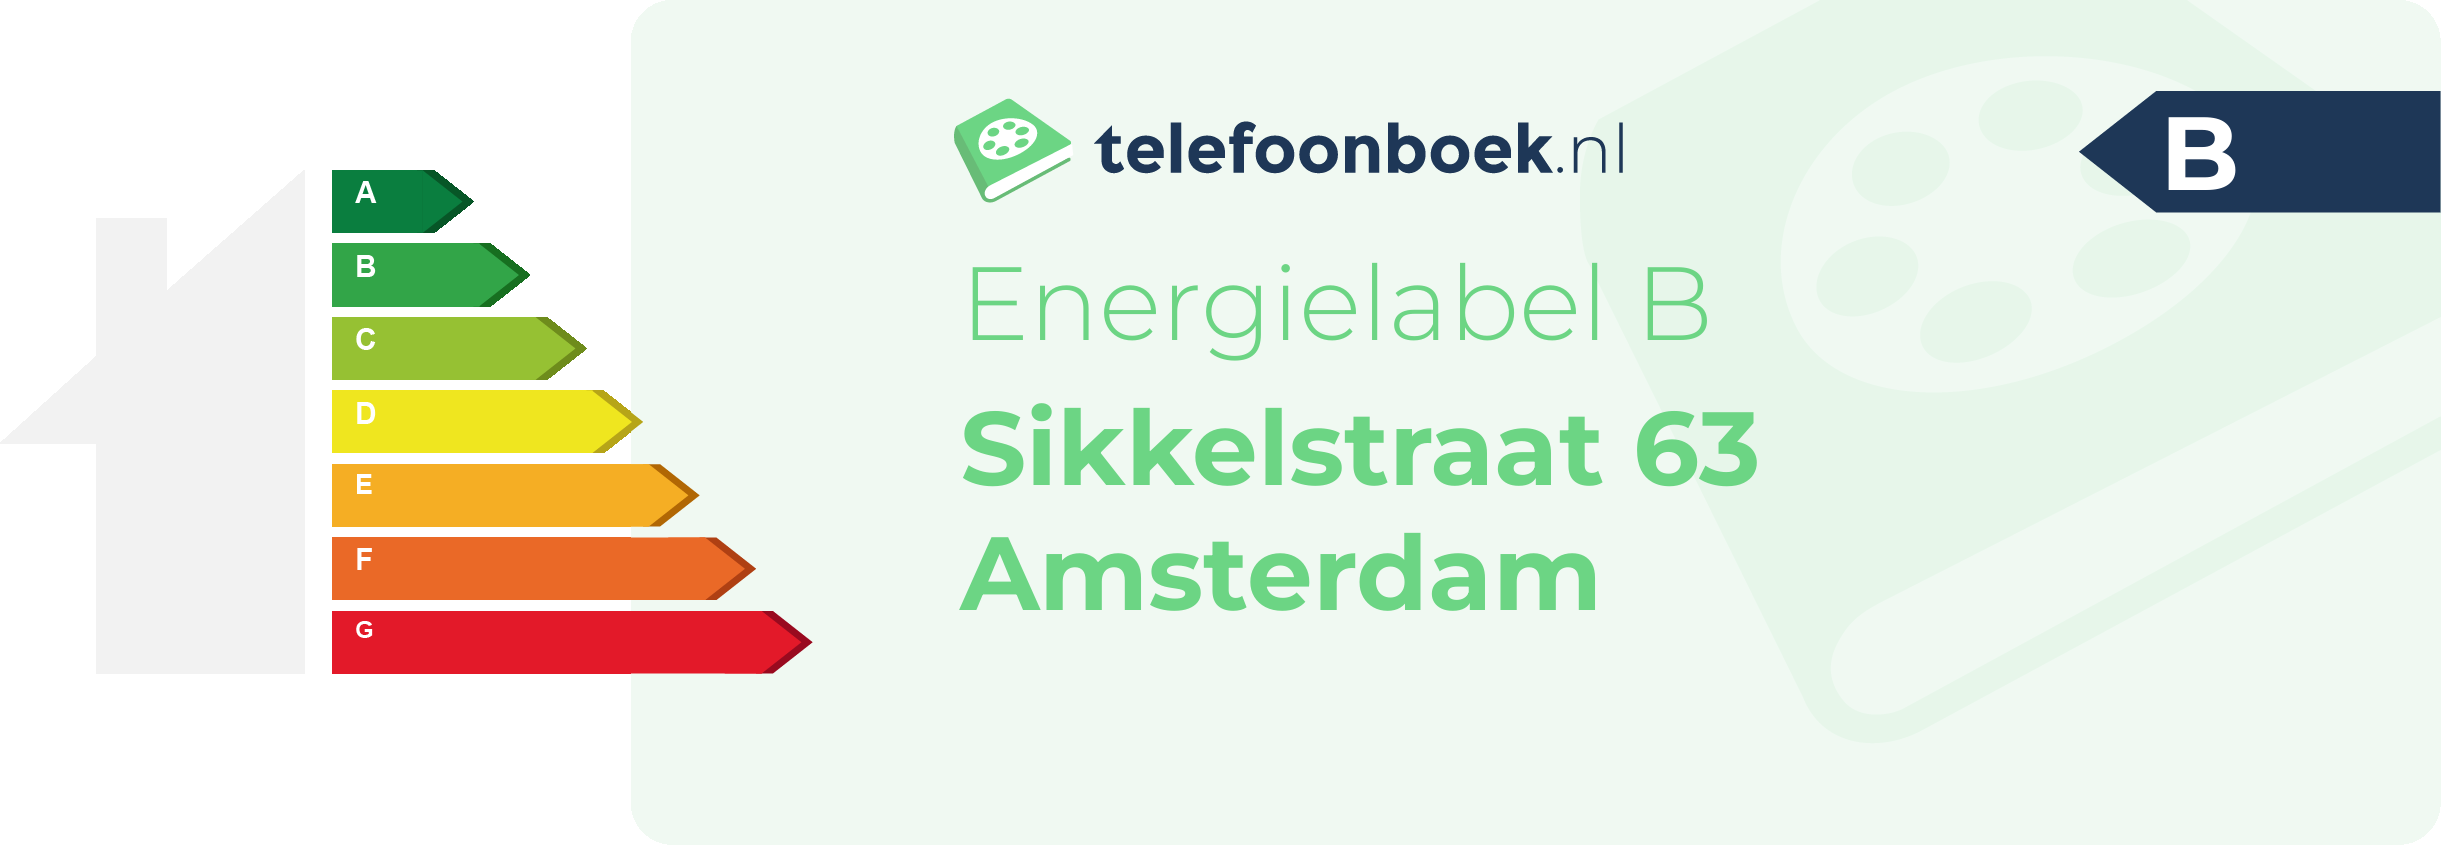 Energielabel Sikkelstraat 63 Amsterdam